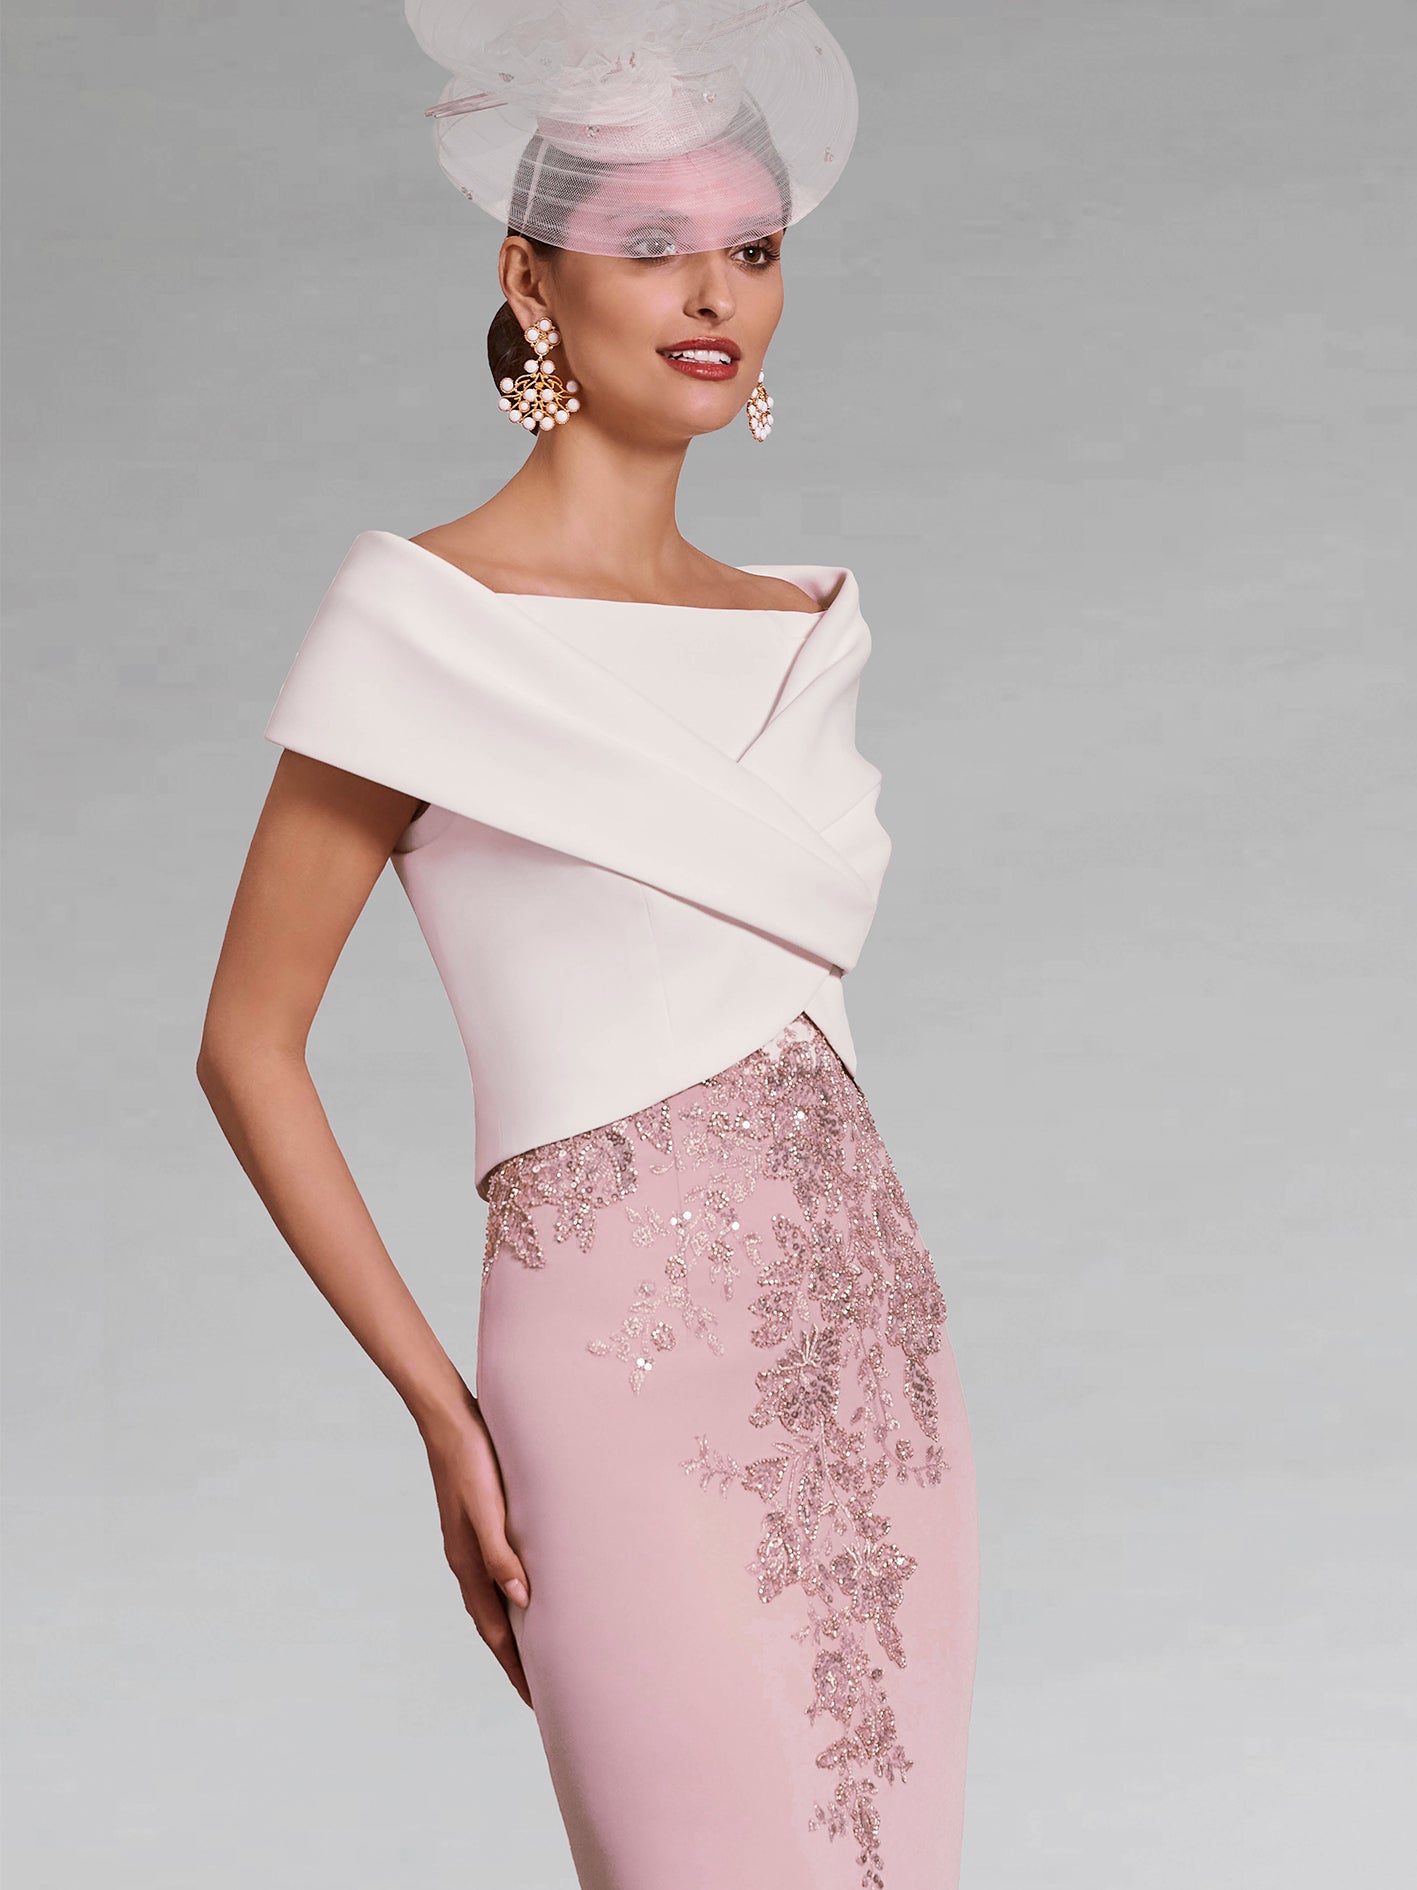 Veni Infantino - Dress & Jacket -992056 - pink - Ever Elegant